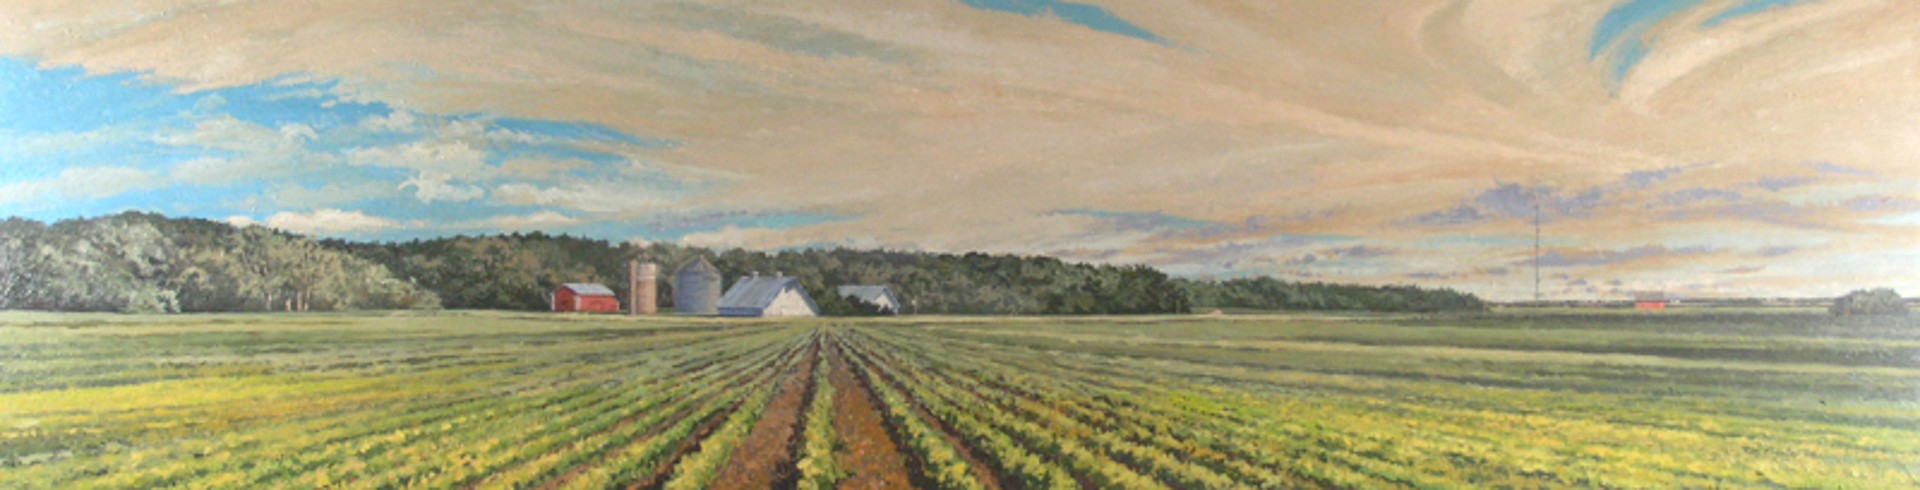 Soybean Field by Tim Klunder